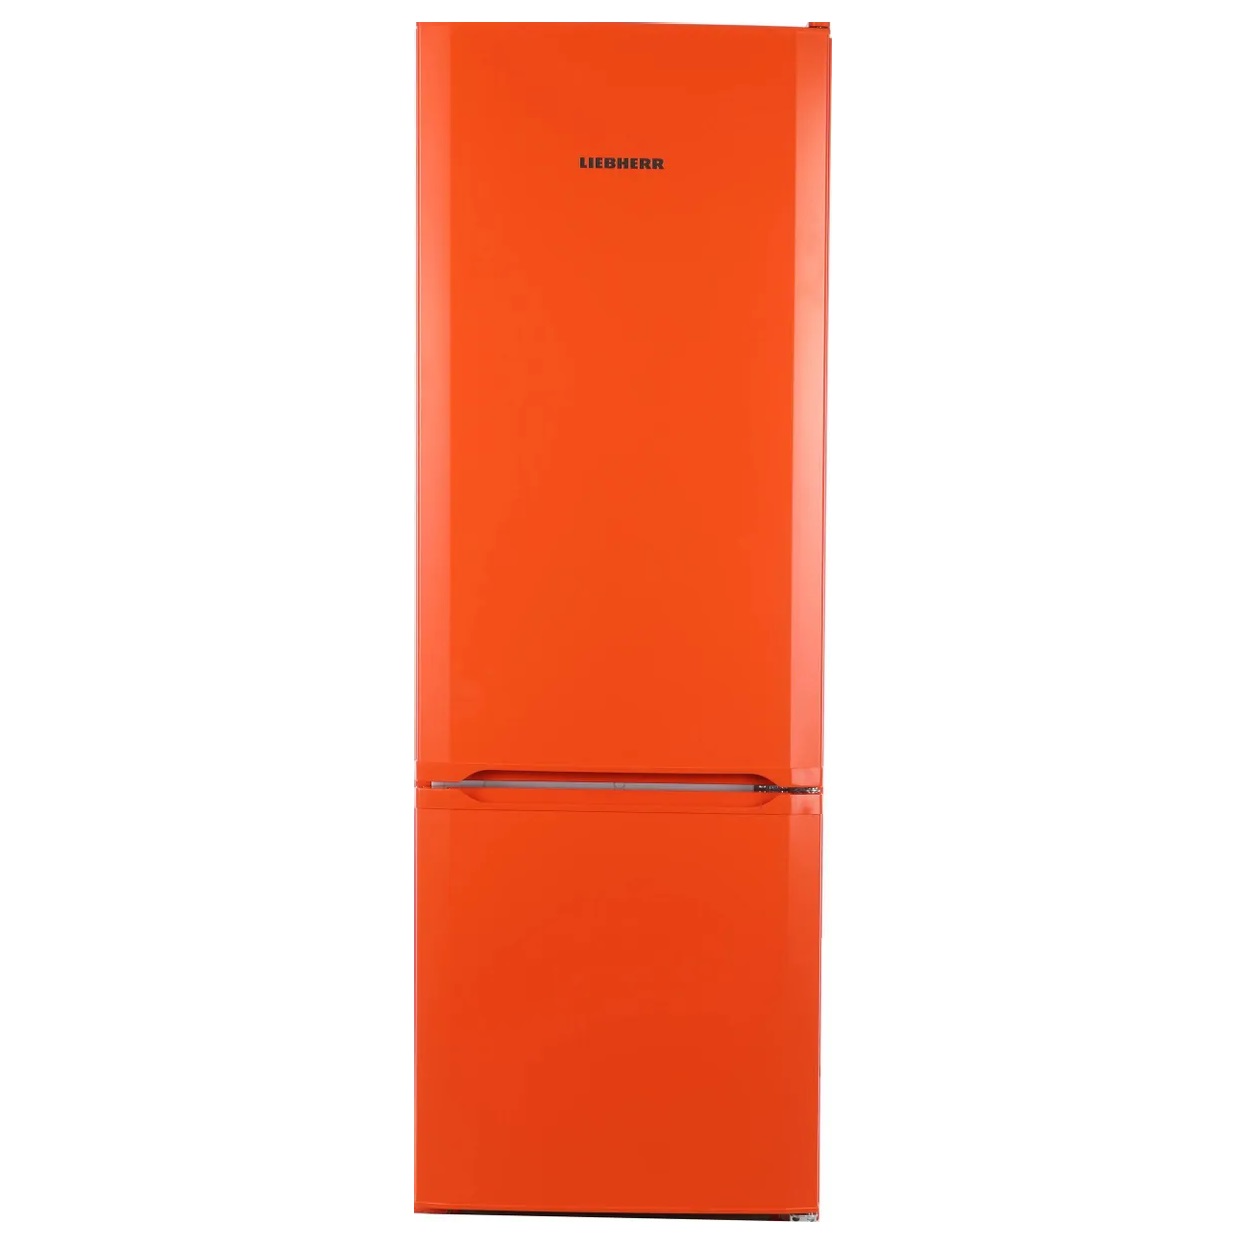 Холодильник LIEBHERR CUNO 2831-22 001 оранжевый холодильник liebherr cuno 2831 оранжевый